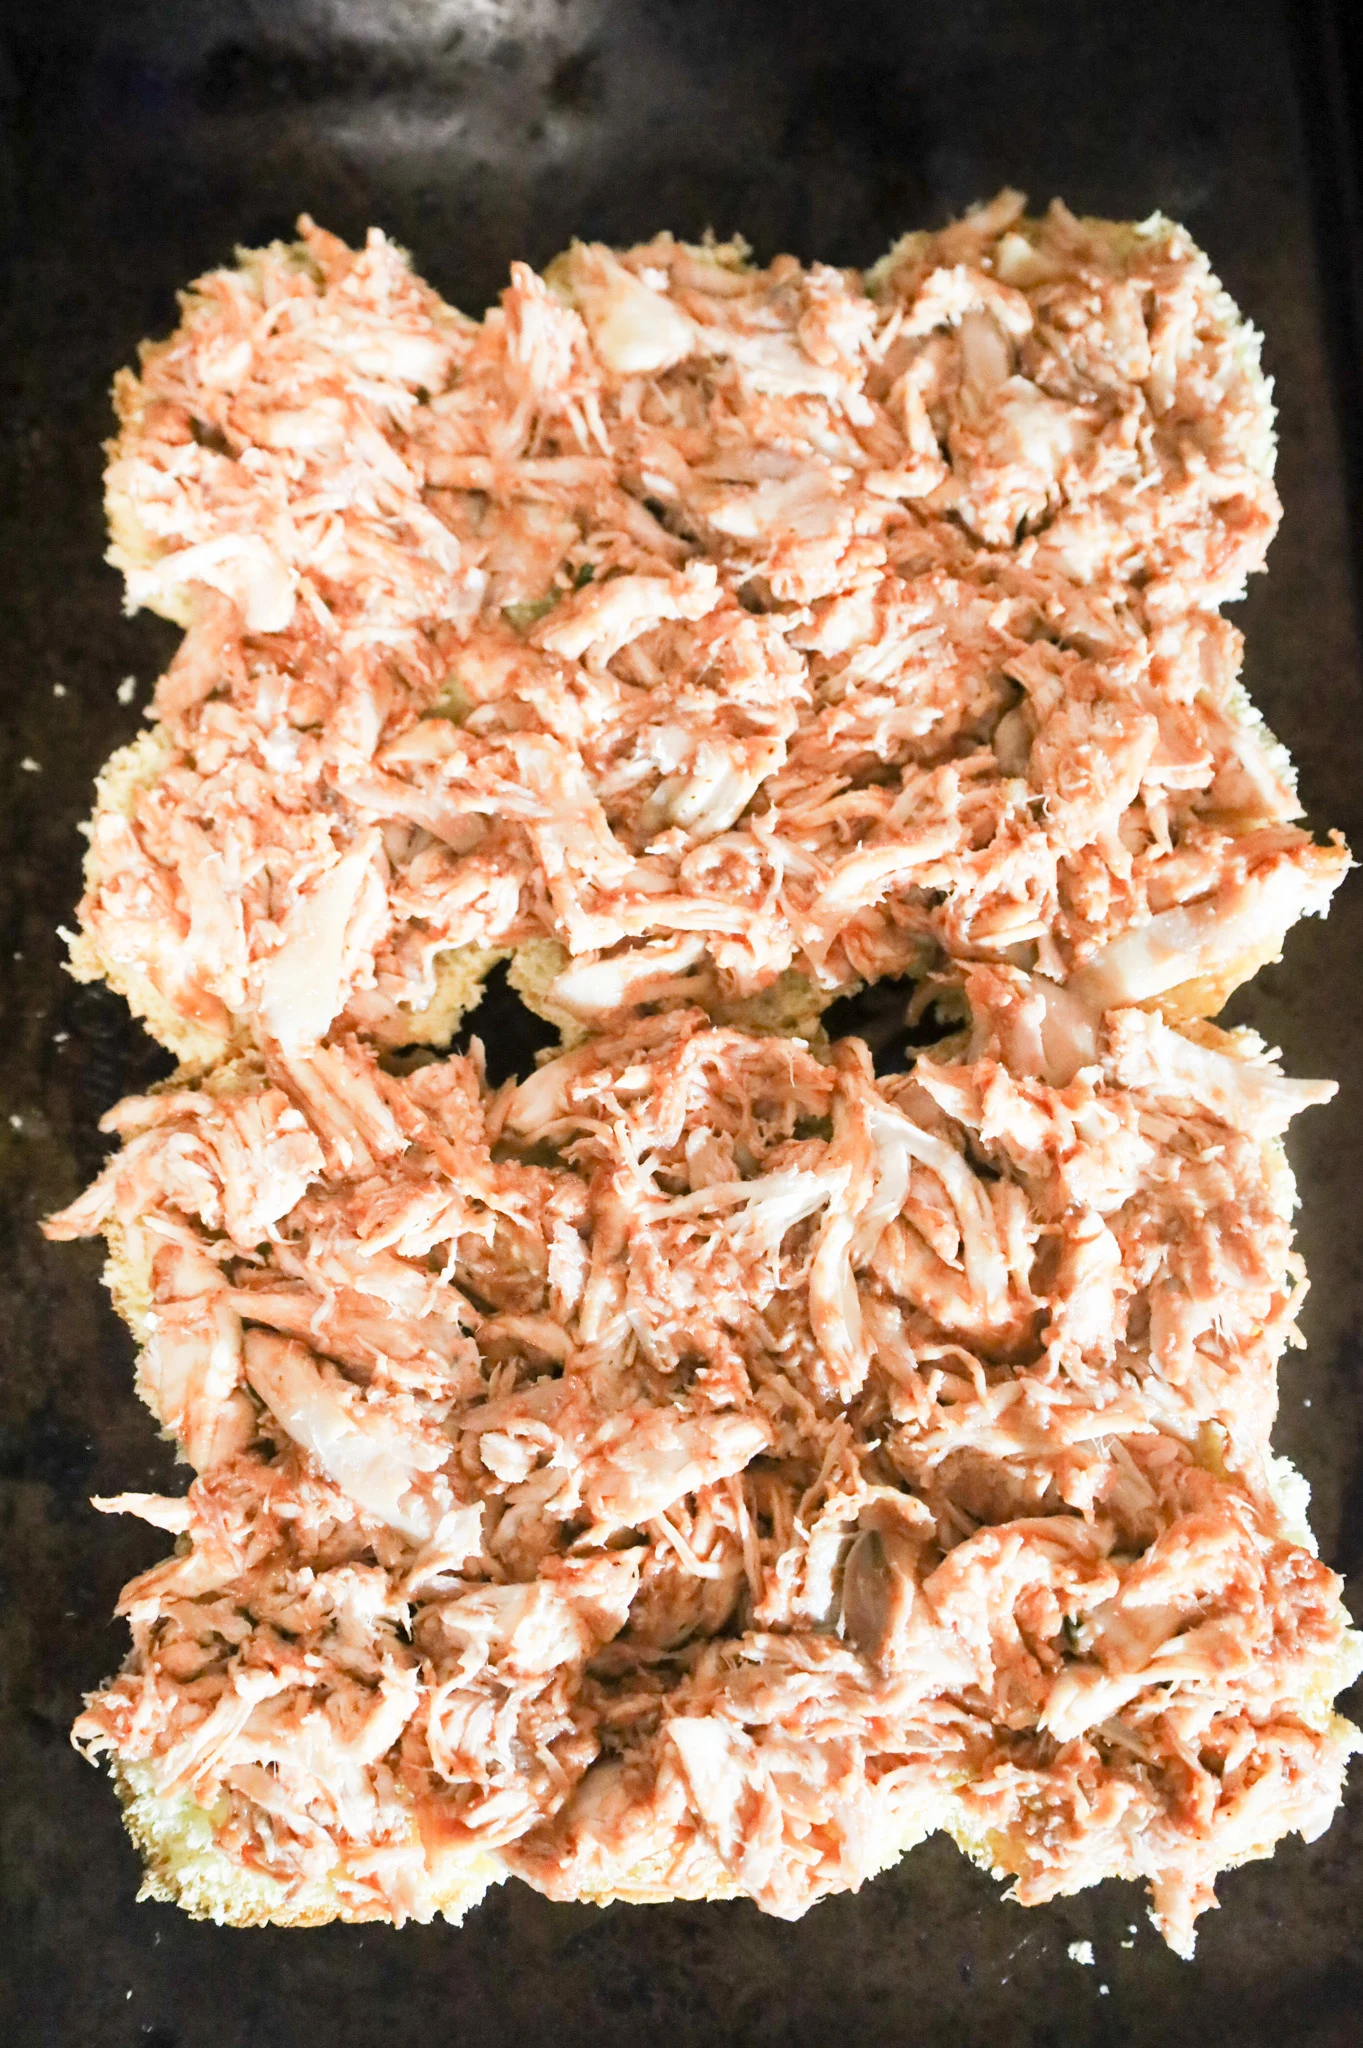 shredded bbq chicken on top of dinner rolls on a baking sheet